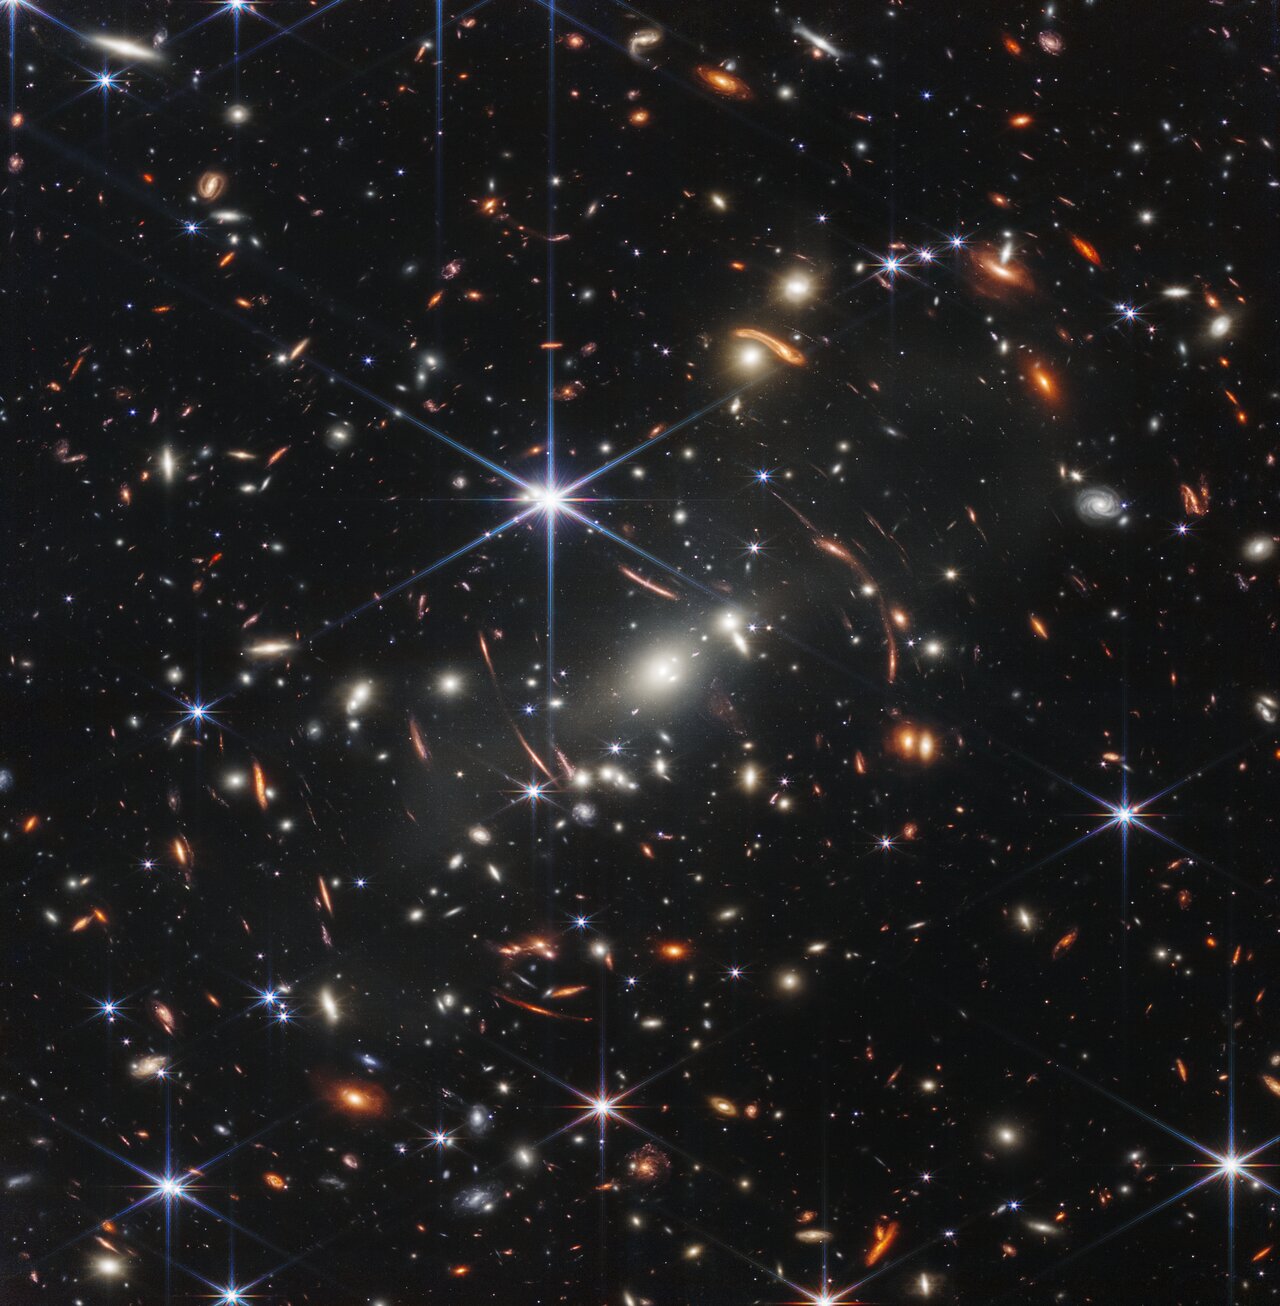 Galaxies, from Webb Telescope